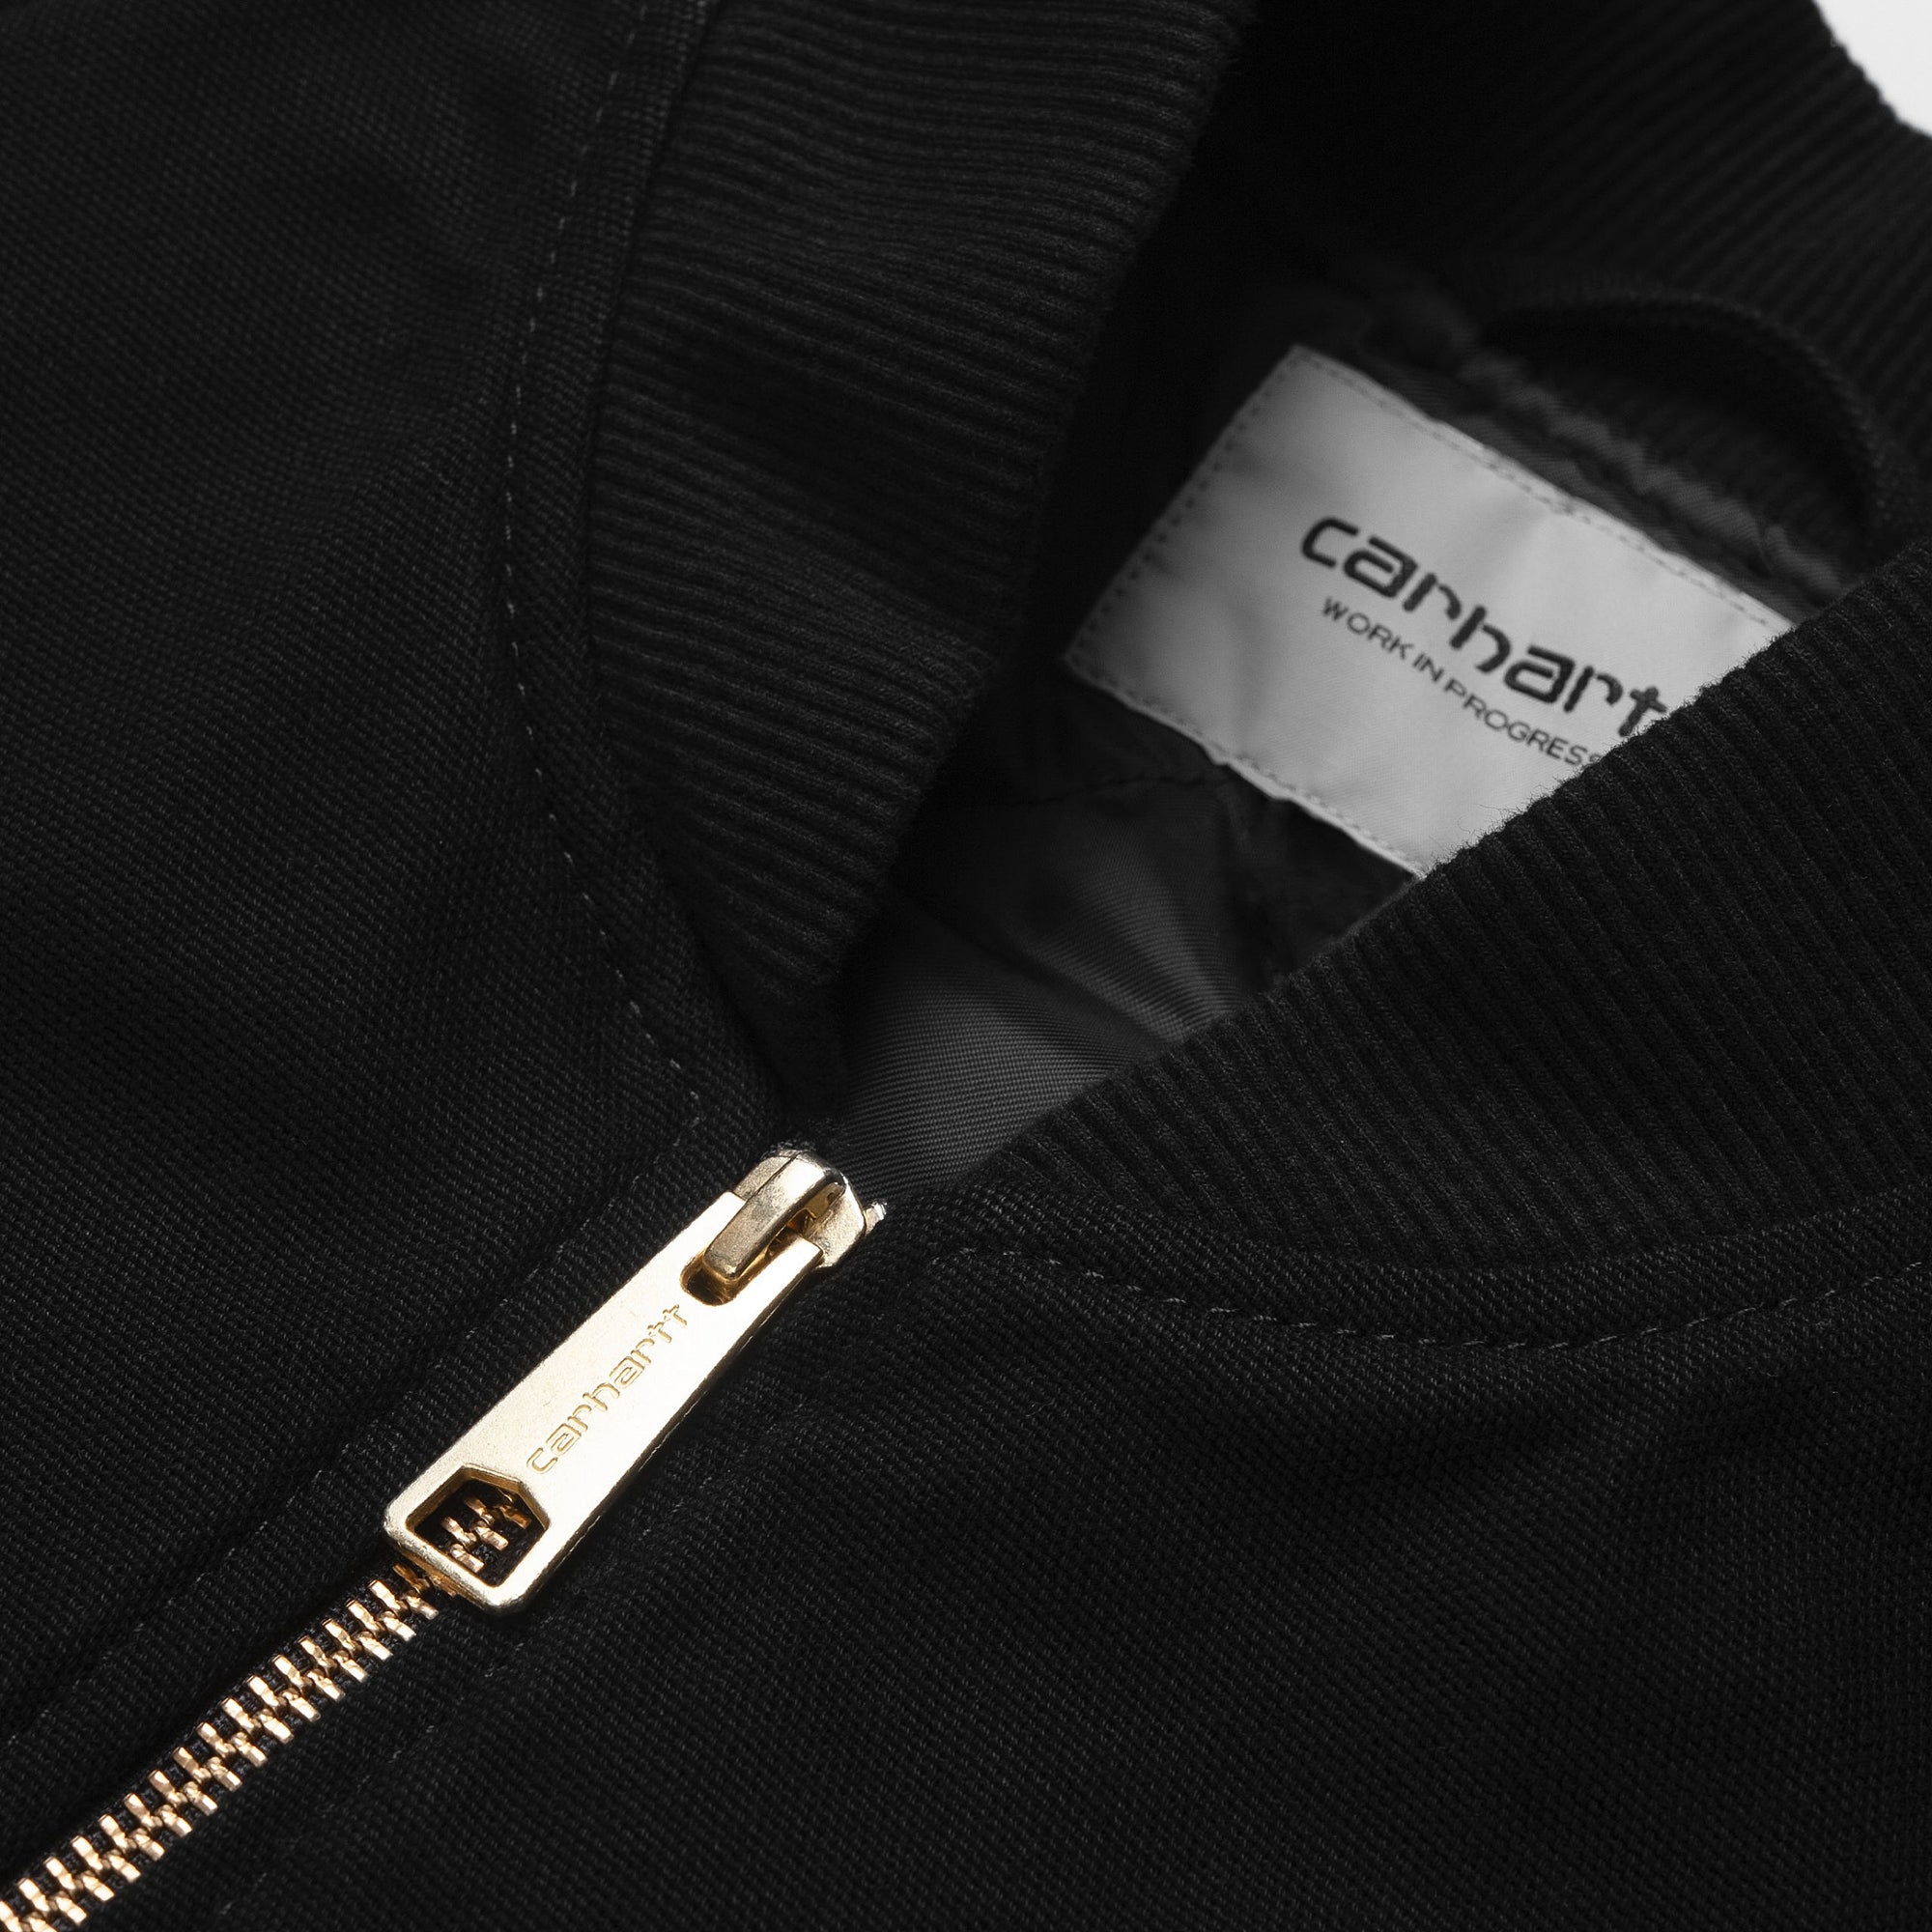 Carhartt WIP Black Canvas Vest Jacket 